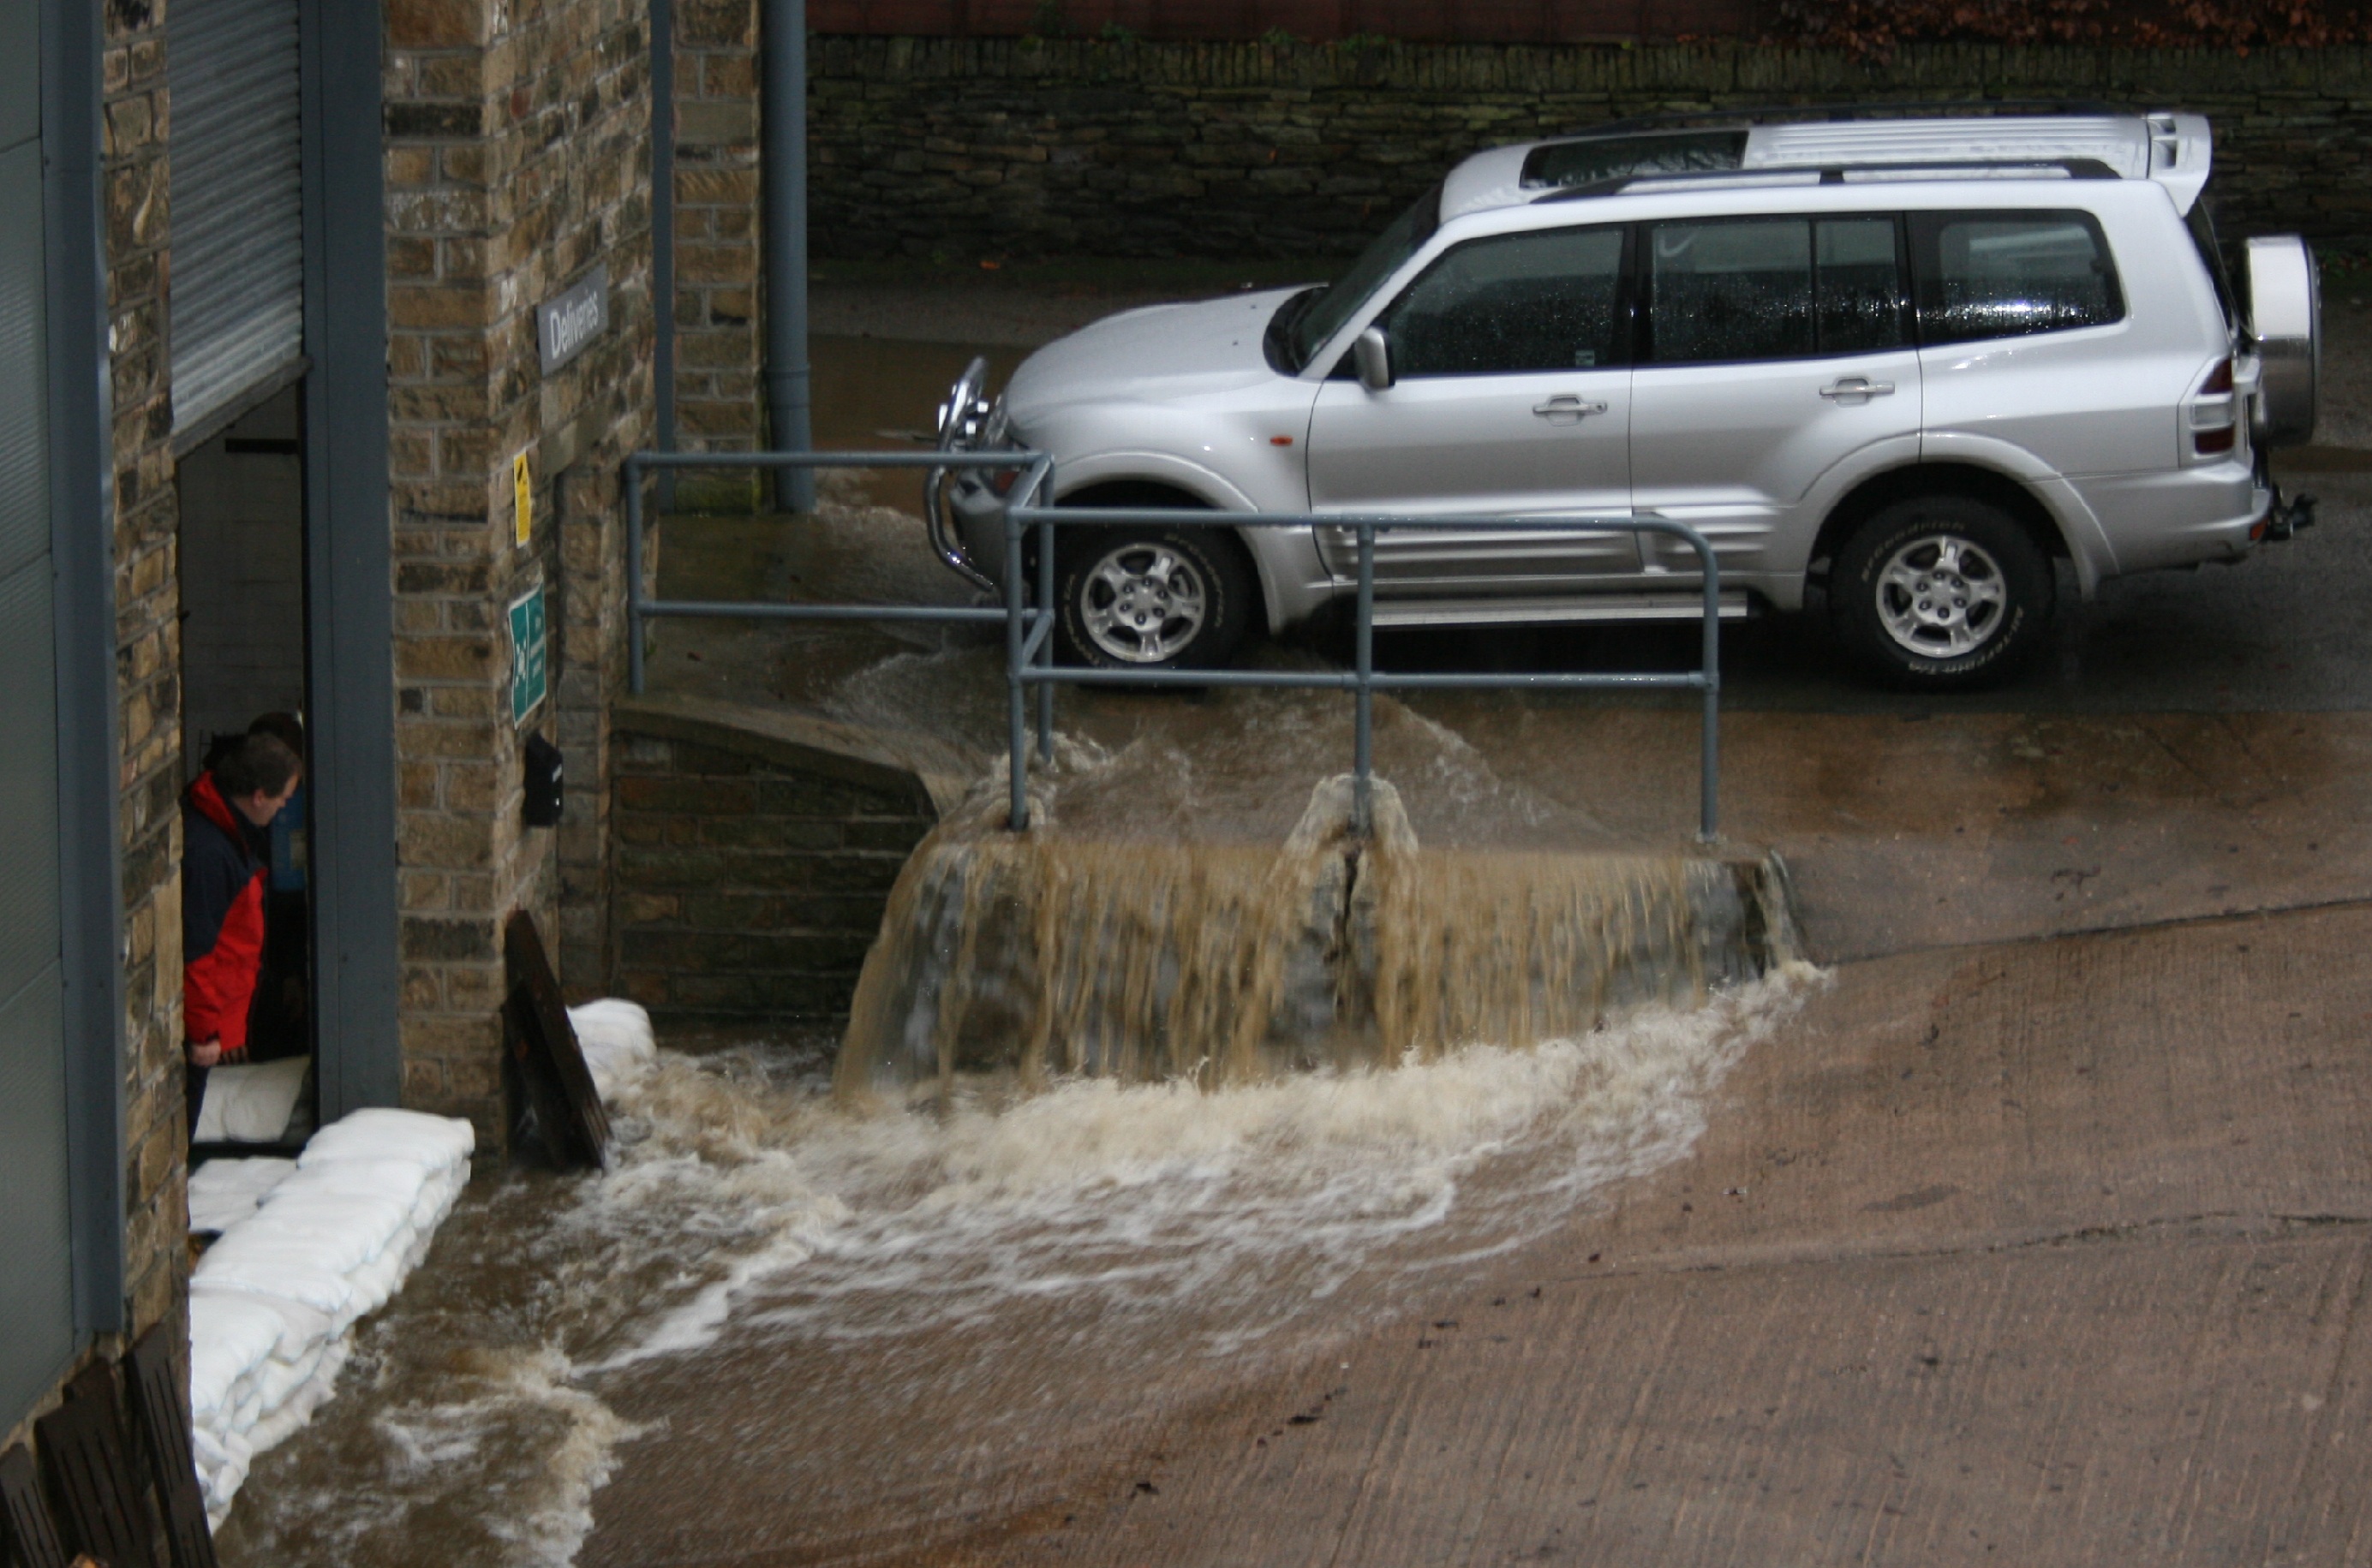 Kirkburton flood 2 close-up cropped.jpg